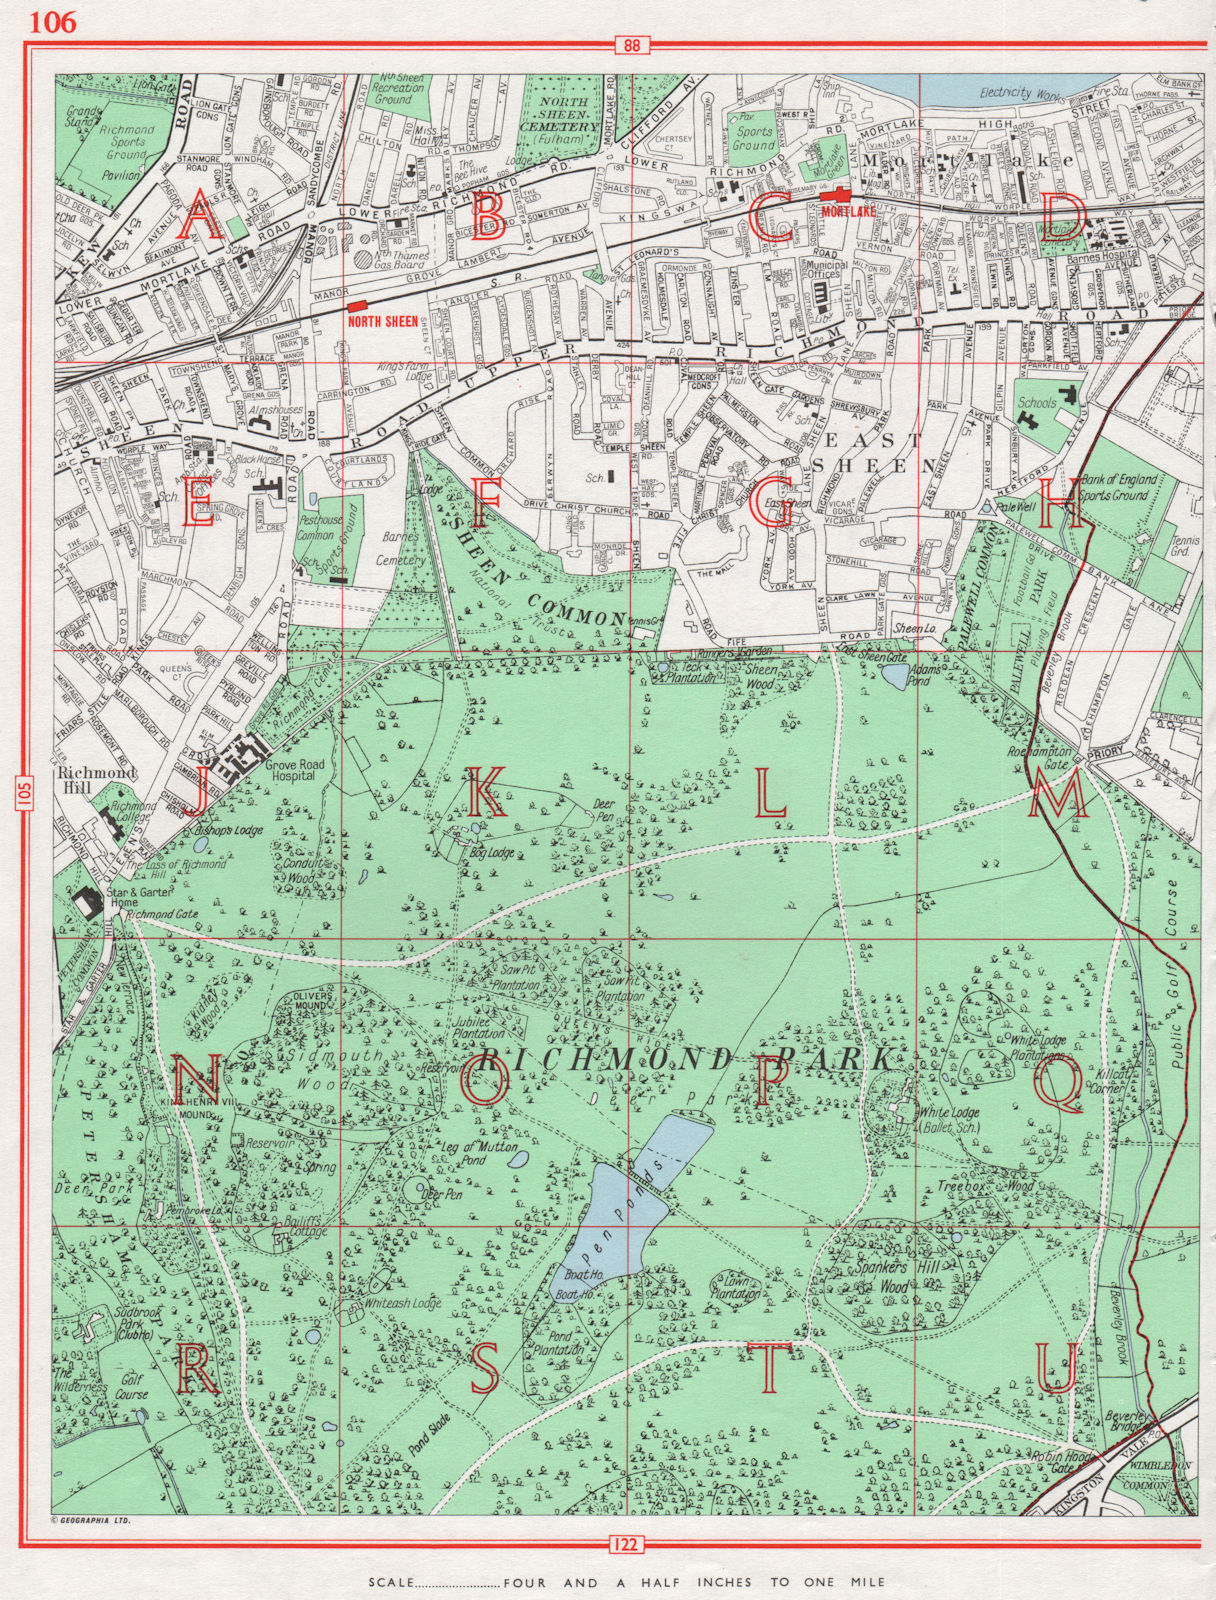 Associate Product RICHMOND PARK. East Sheen North Sheen Mortlake 1964 old vintage map plan chart